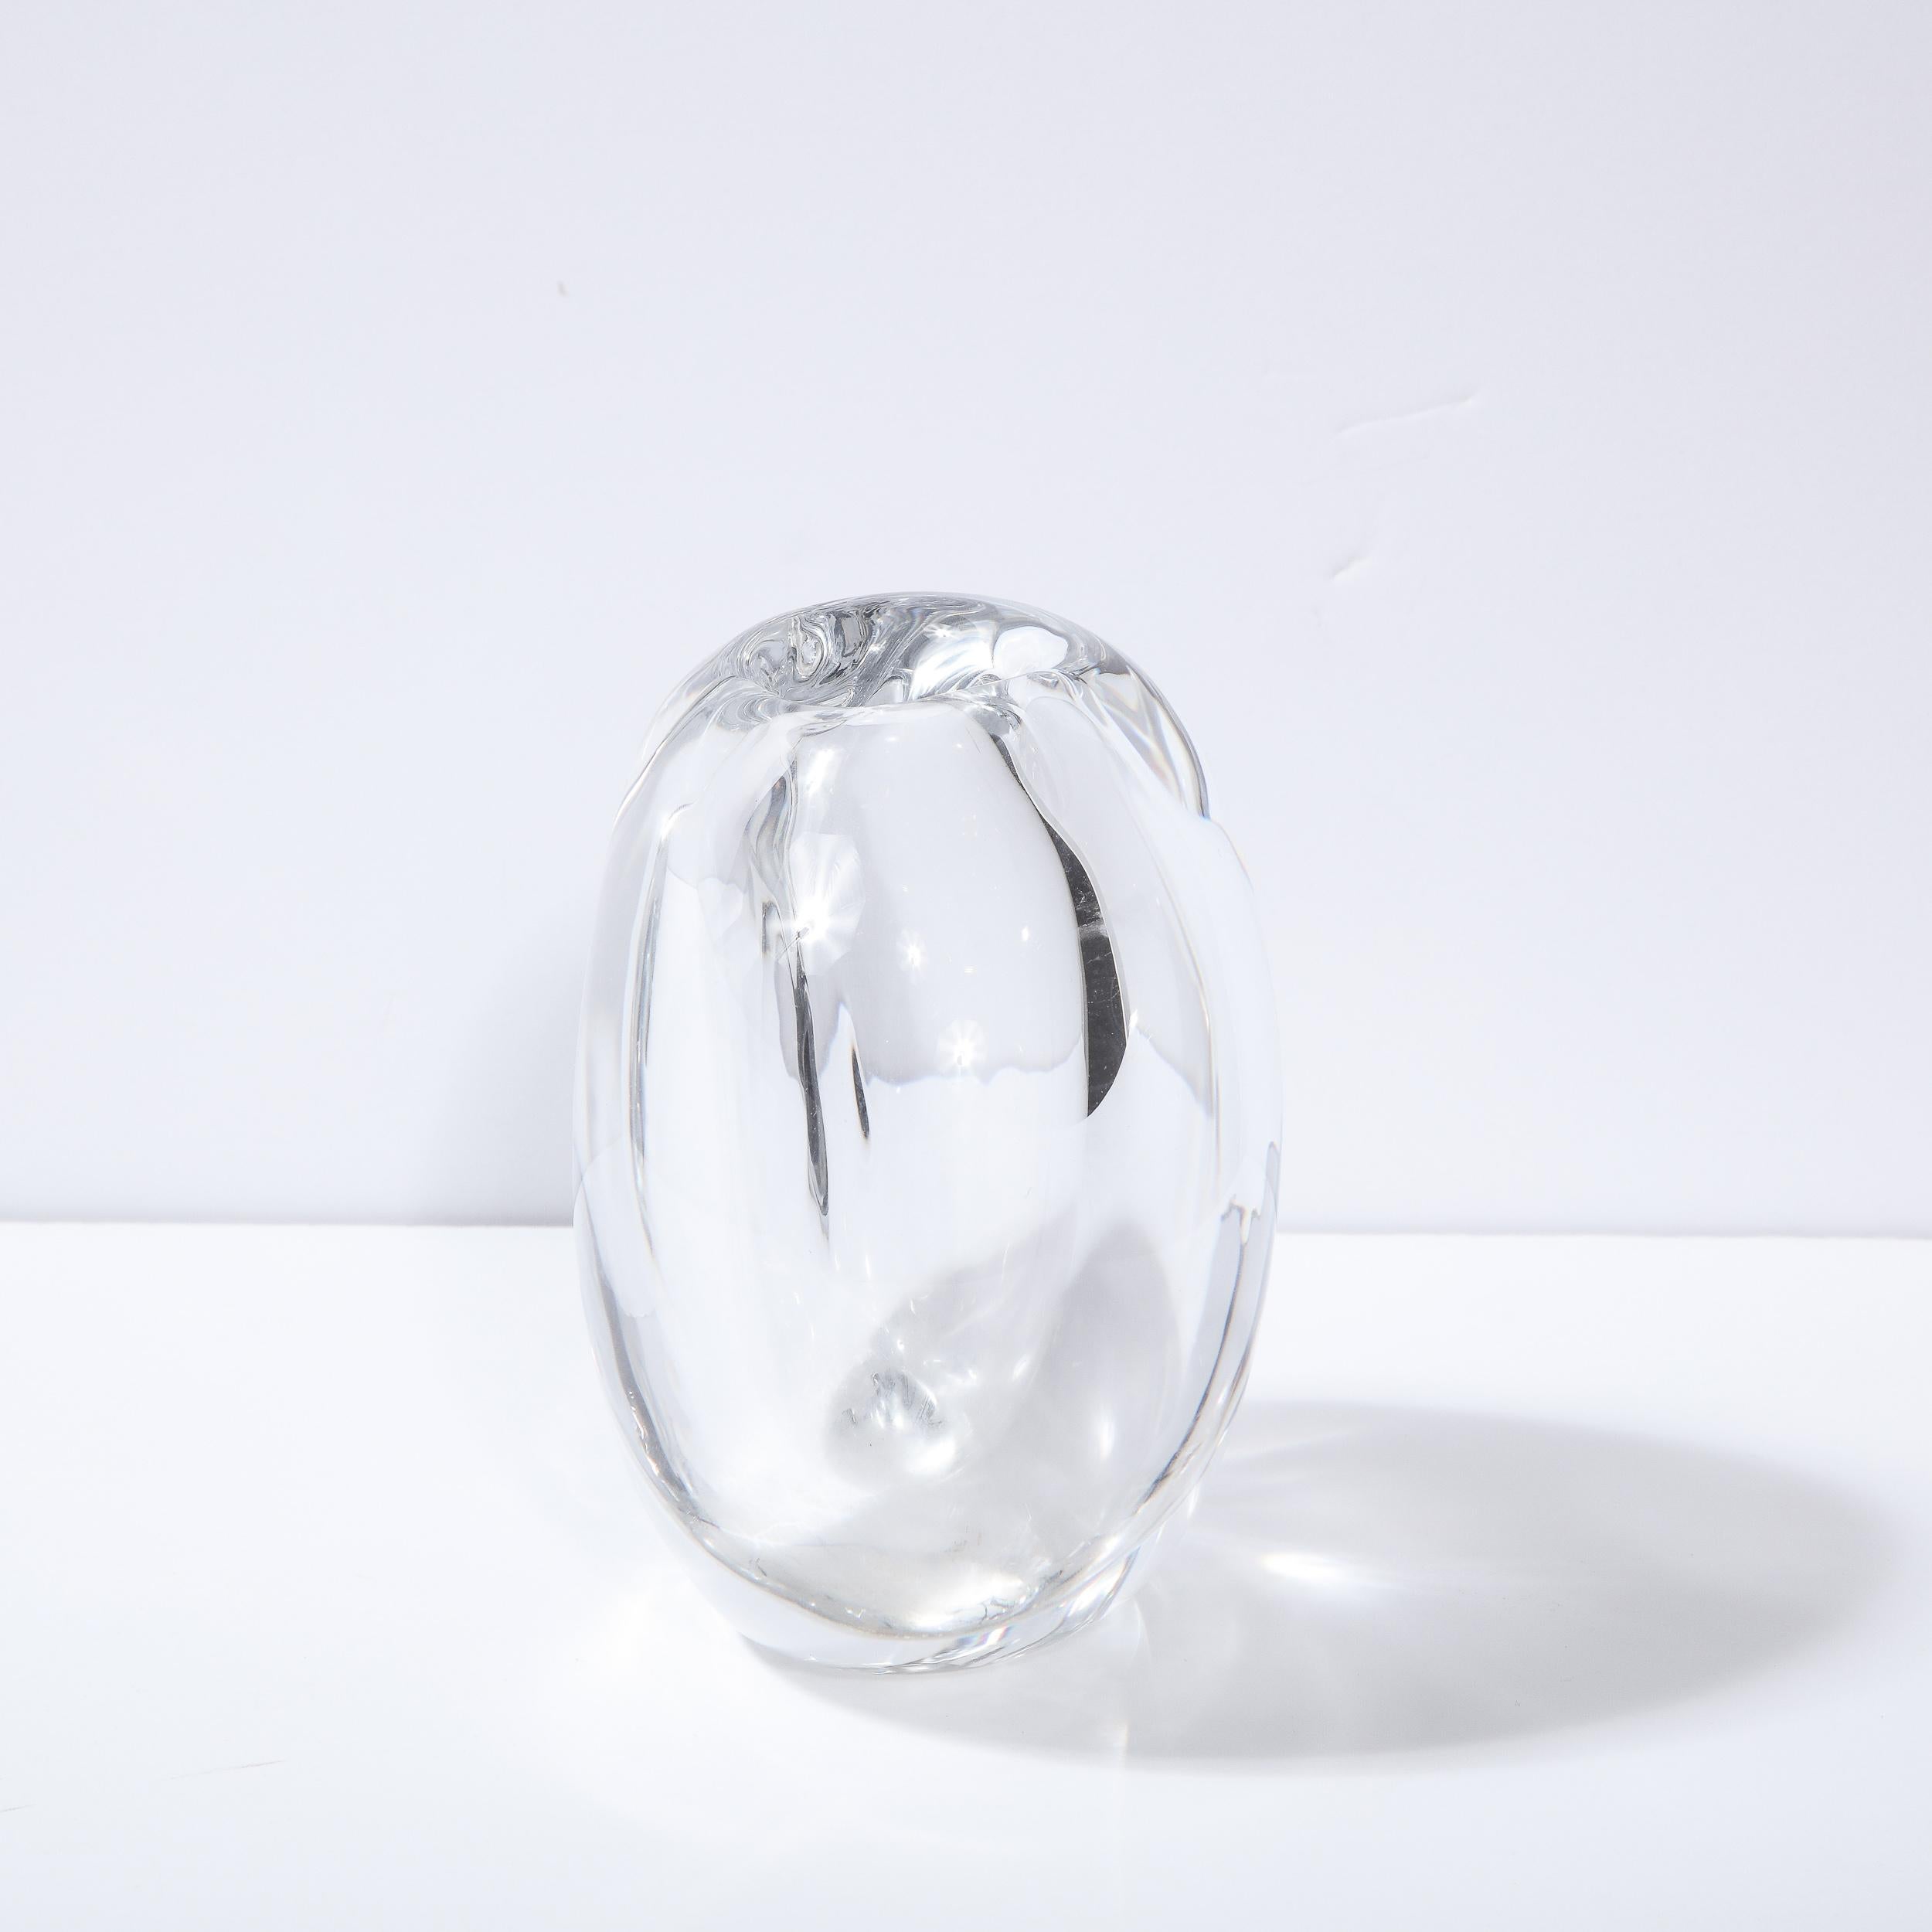 Mid-20th Century Swedish Mid-Century Modern Translucent Glass Vase by Göran Wärff for Kosta Boda For Sale